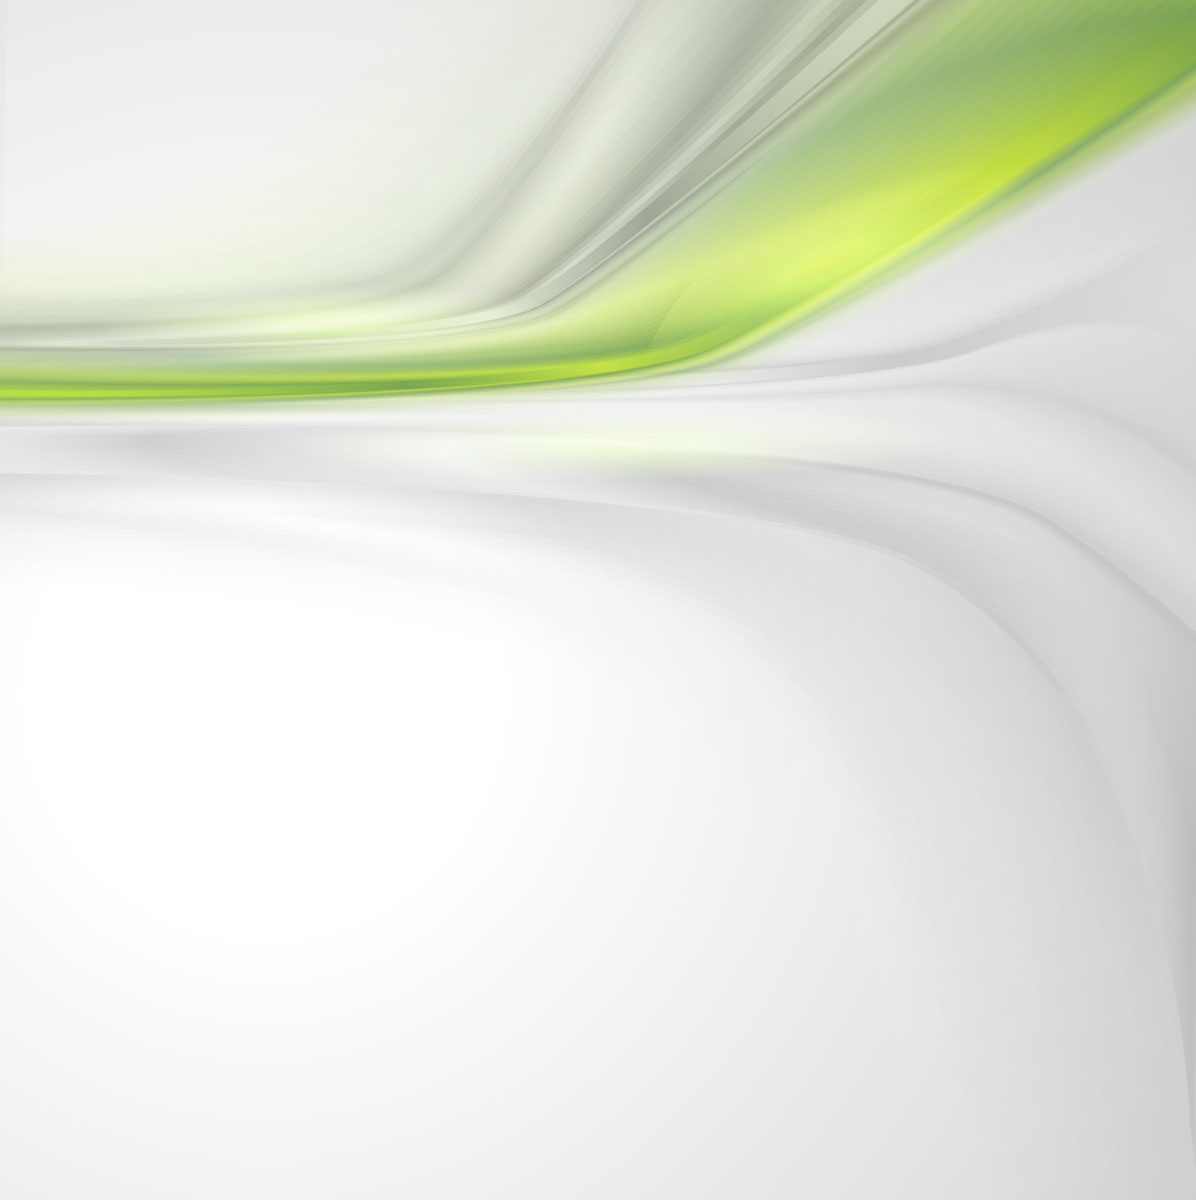 Abstraktes grünes Öko-Stil-Hintergrundvektor 15 wavy Öko grün background abstract   